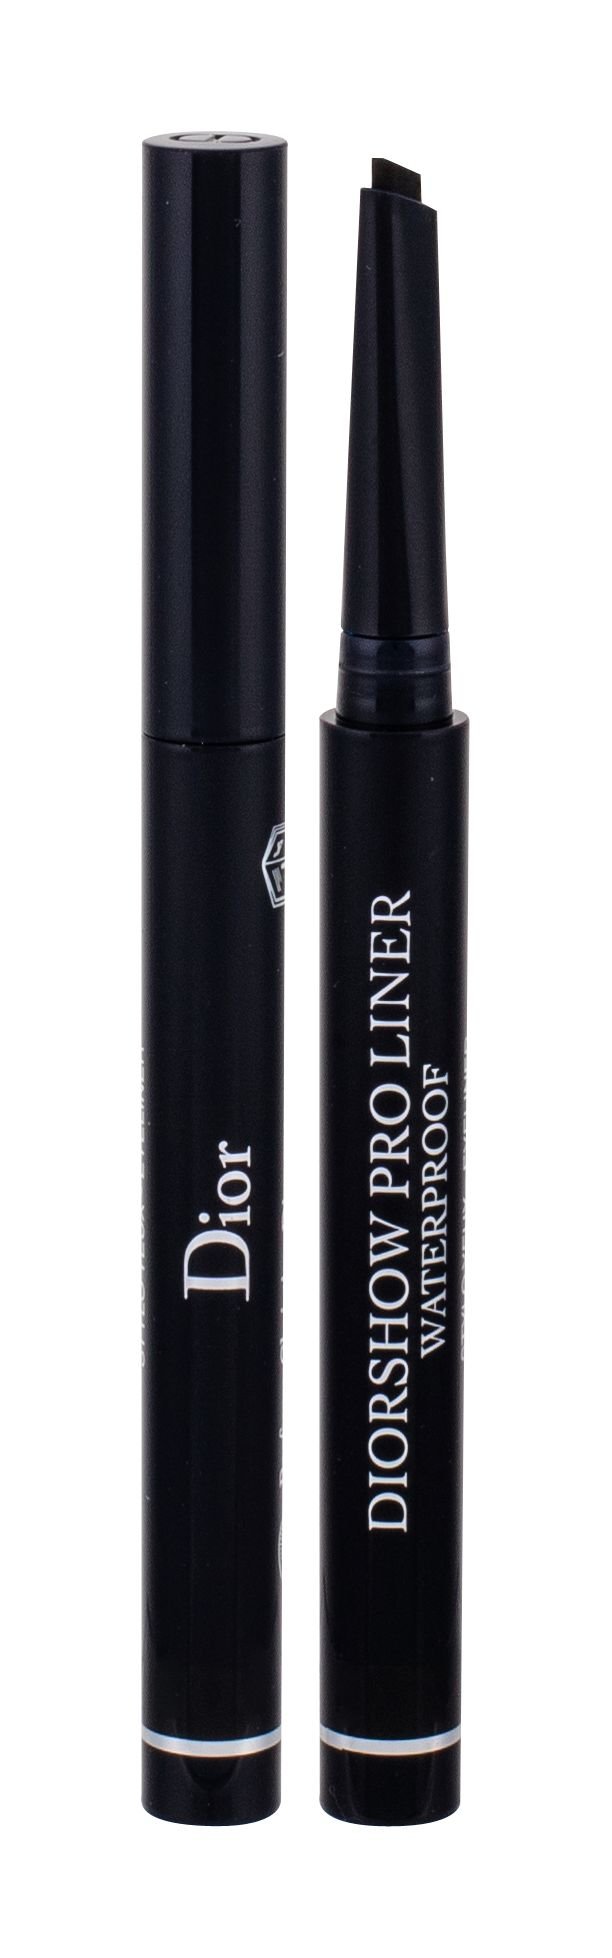 Christian Dior Diorshow Pro Liner akių pieštukas